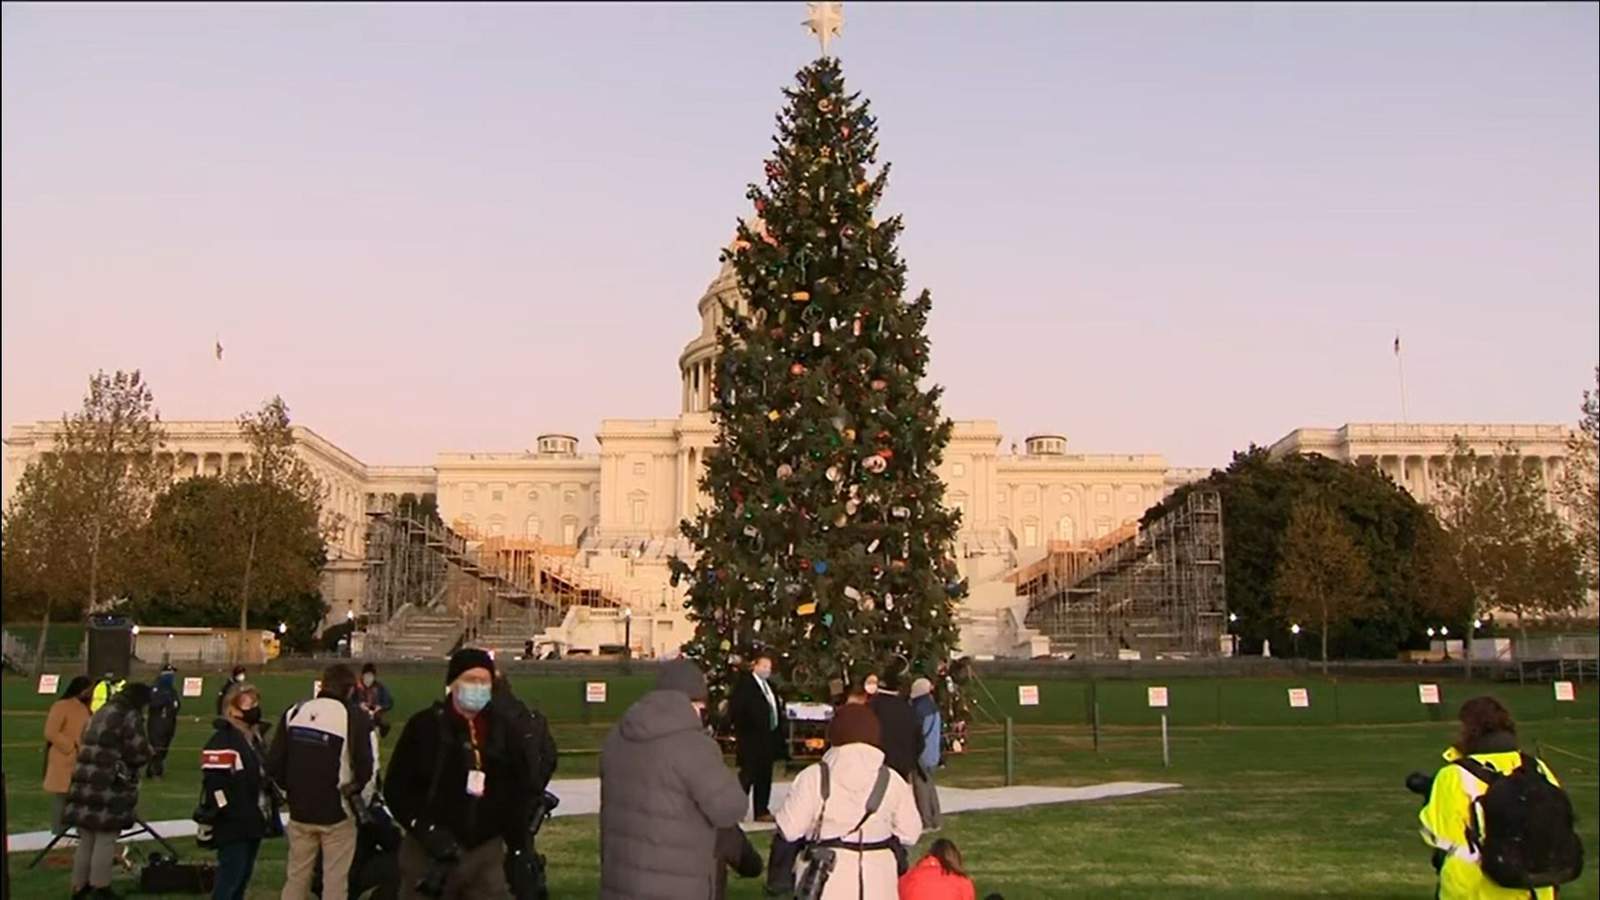 WATCH LIVE: US Capitol Christmas Tree Lighting